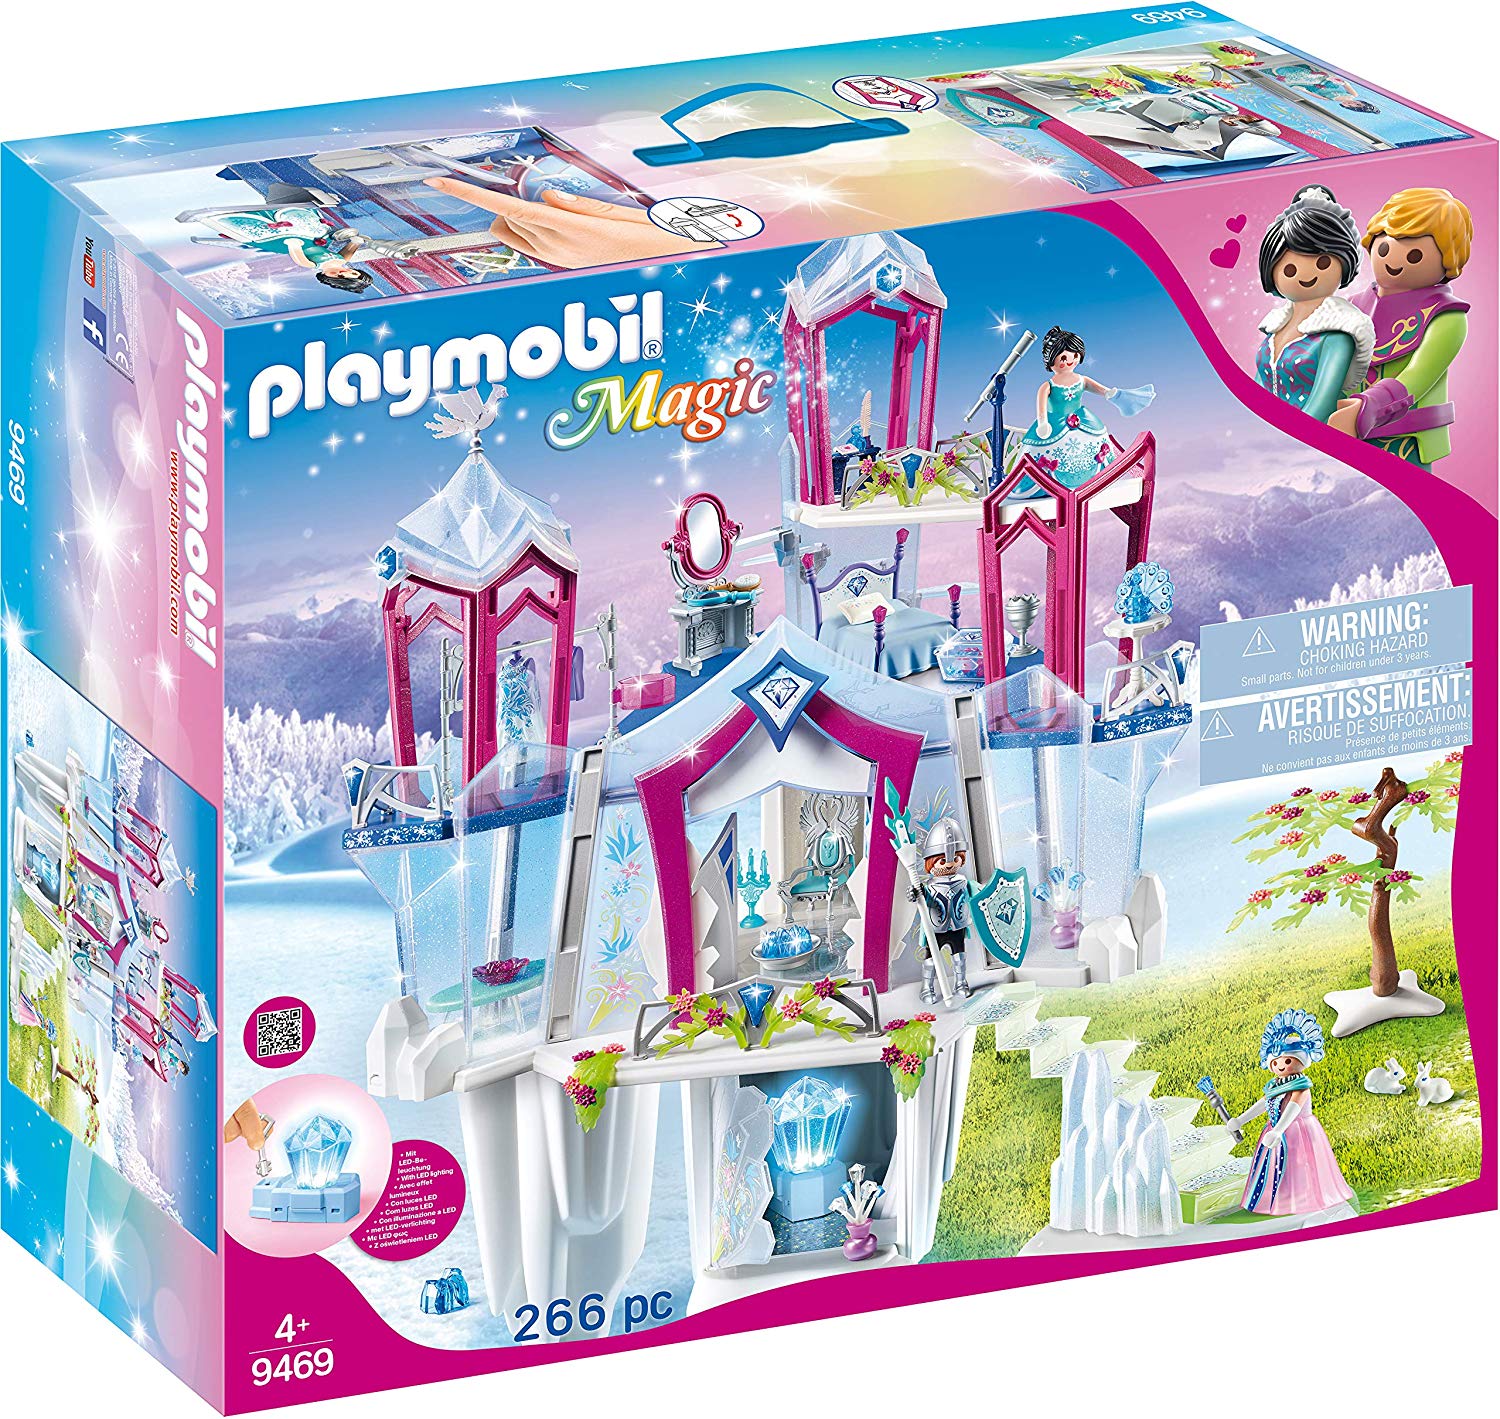 Playmobil Palacio de Cristal solo 63€